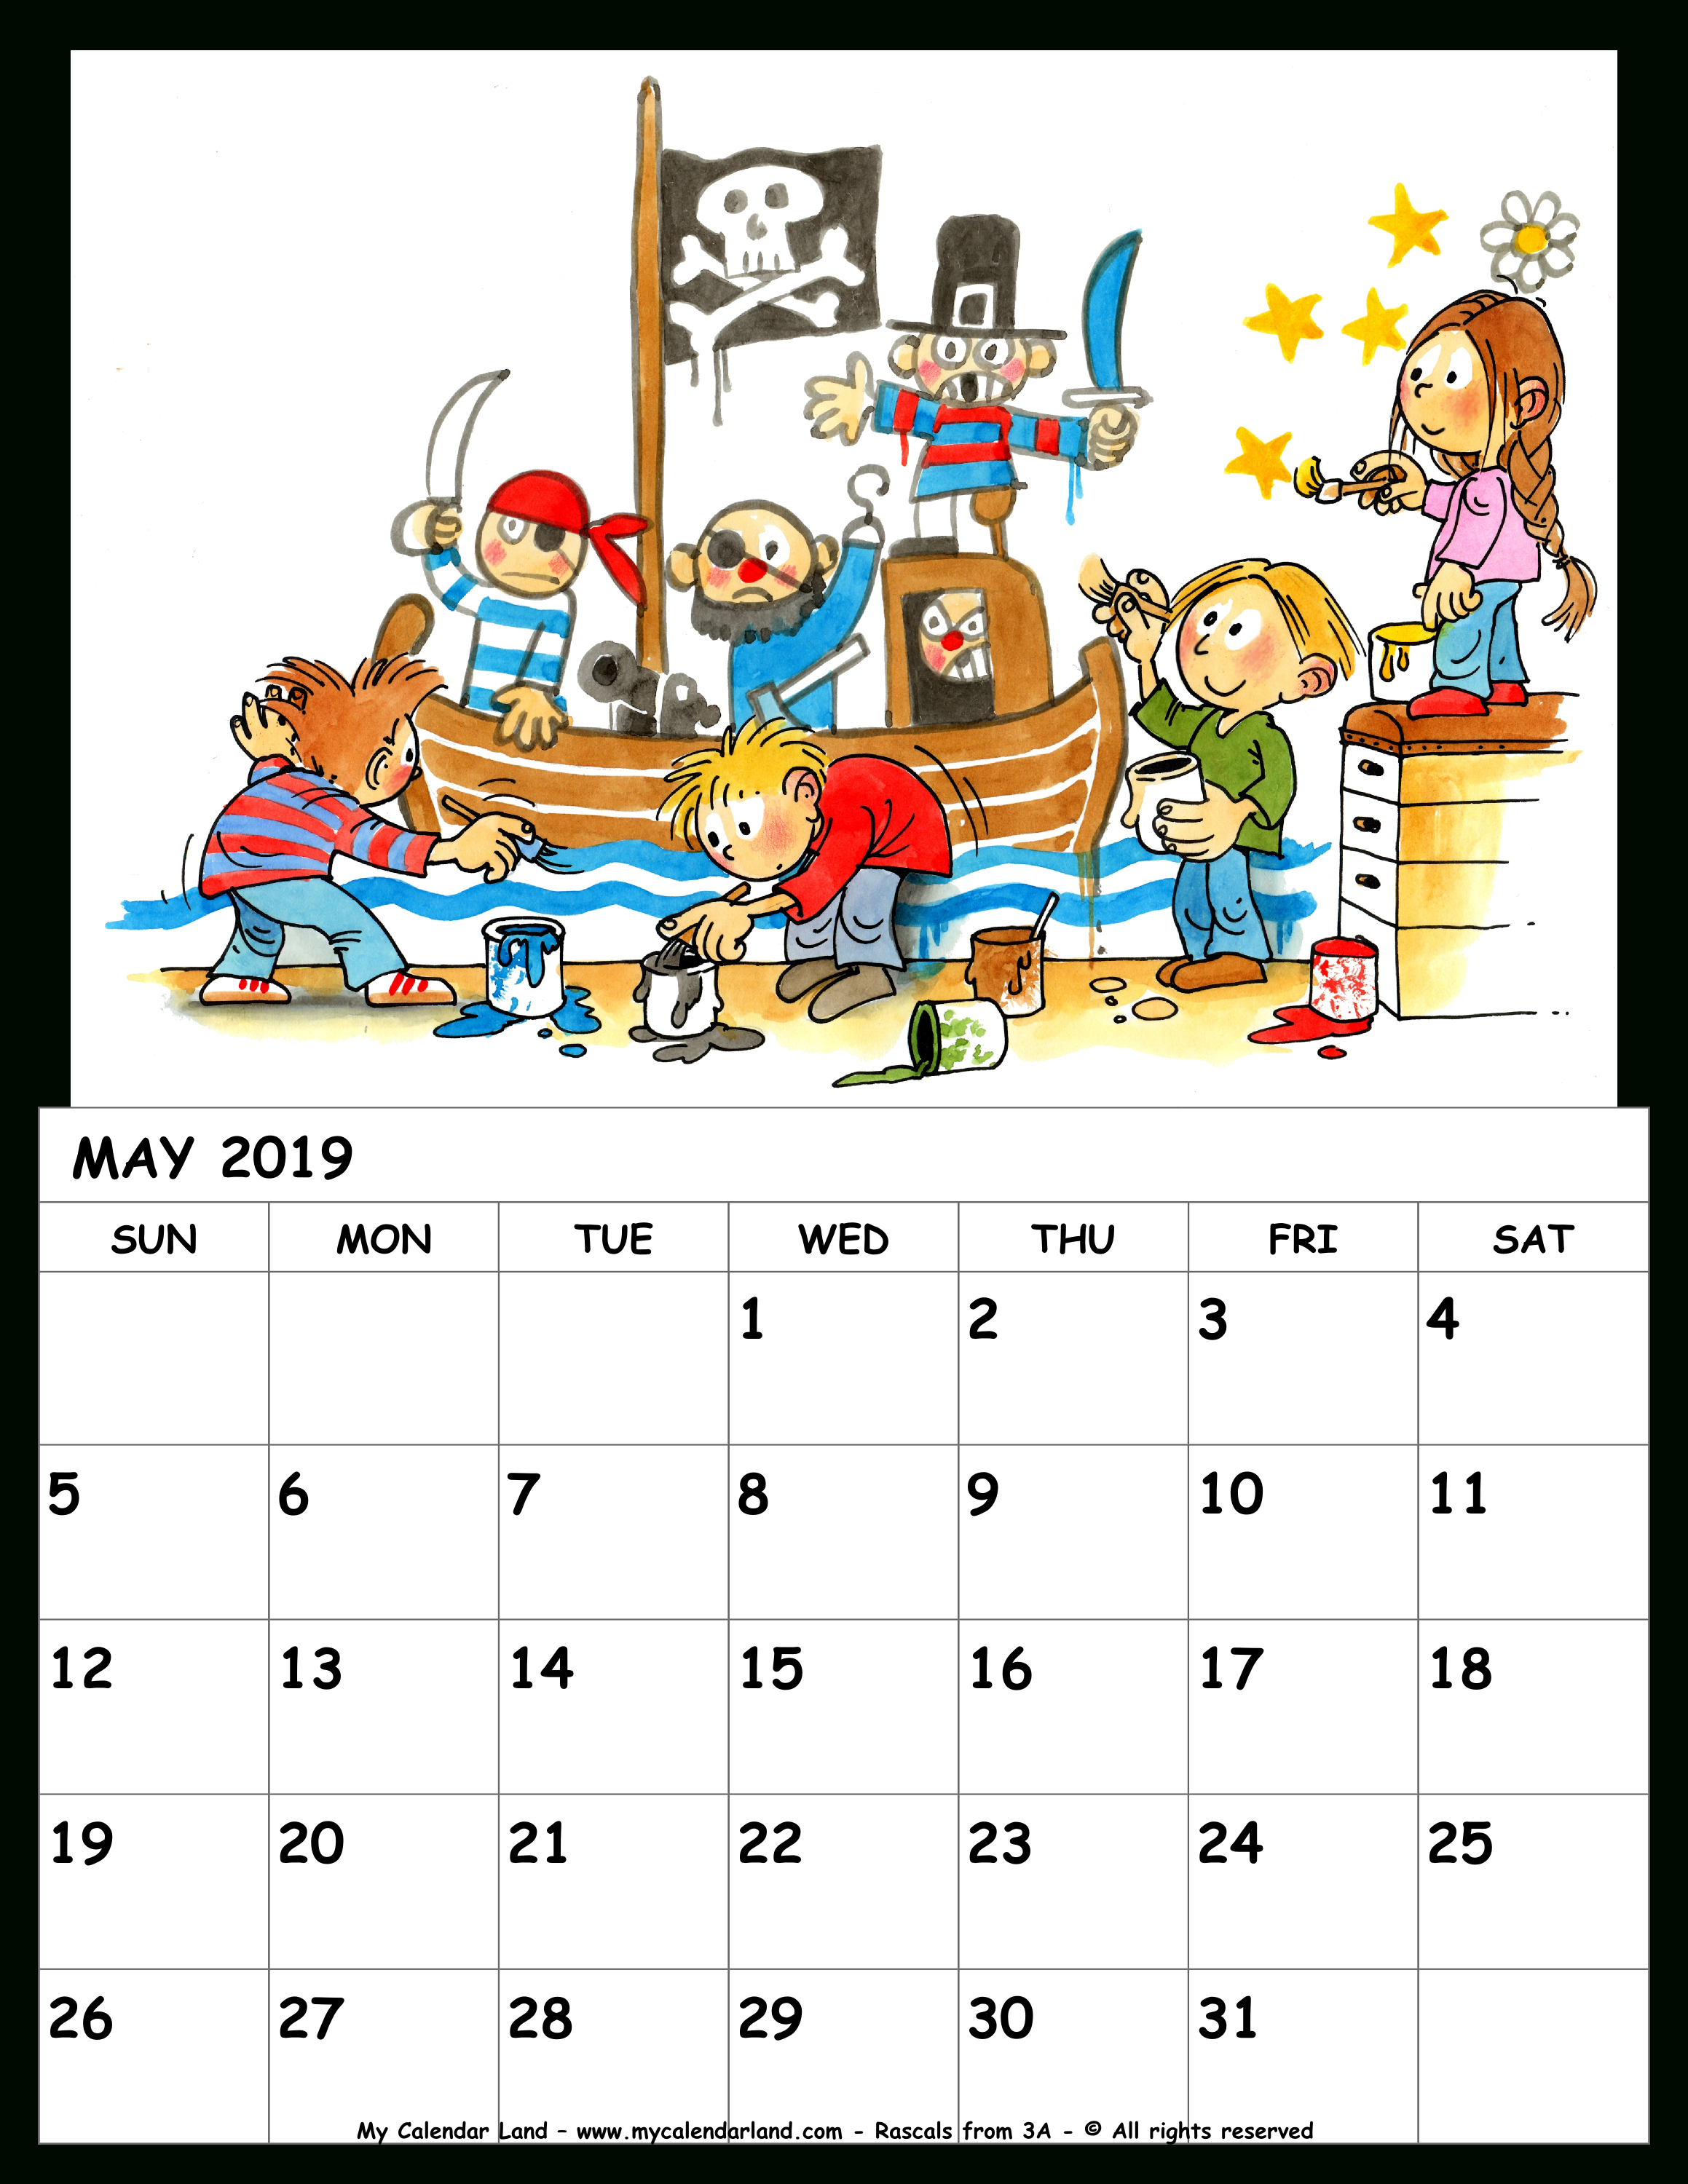 May 2019 Calendar - My Calendar Land